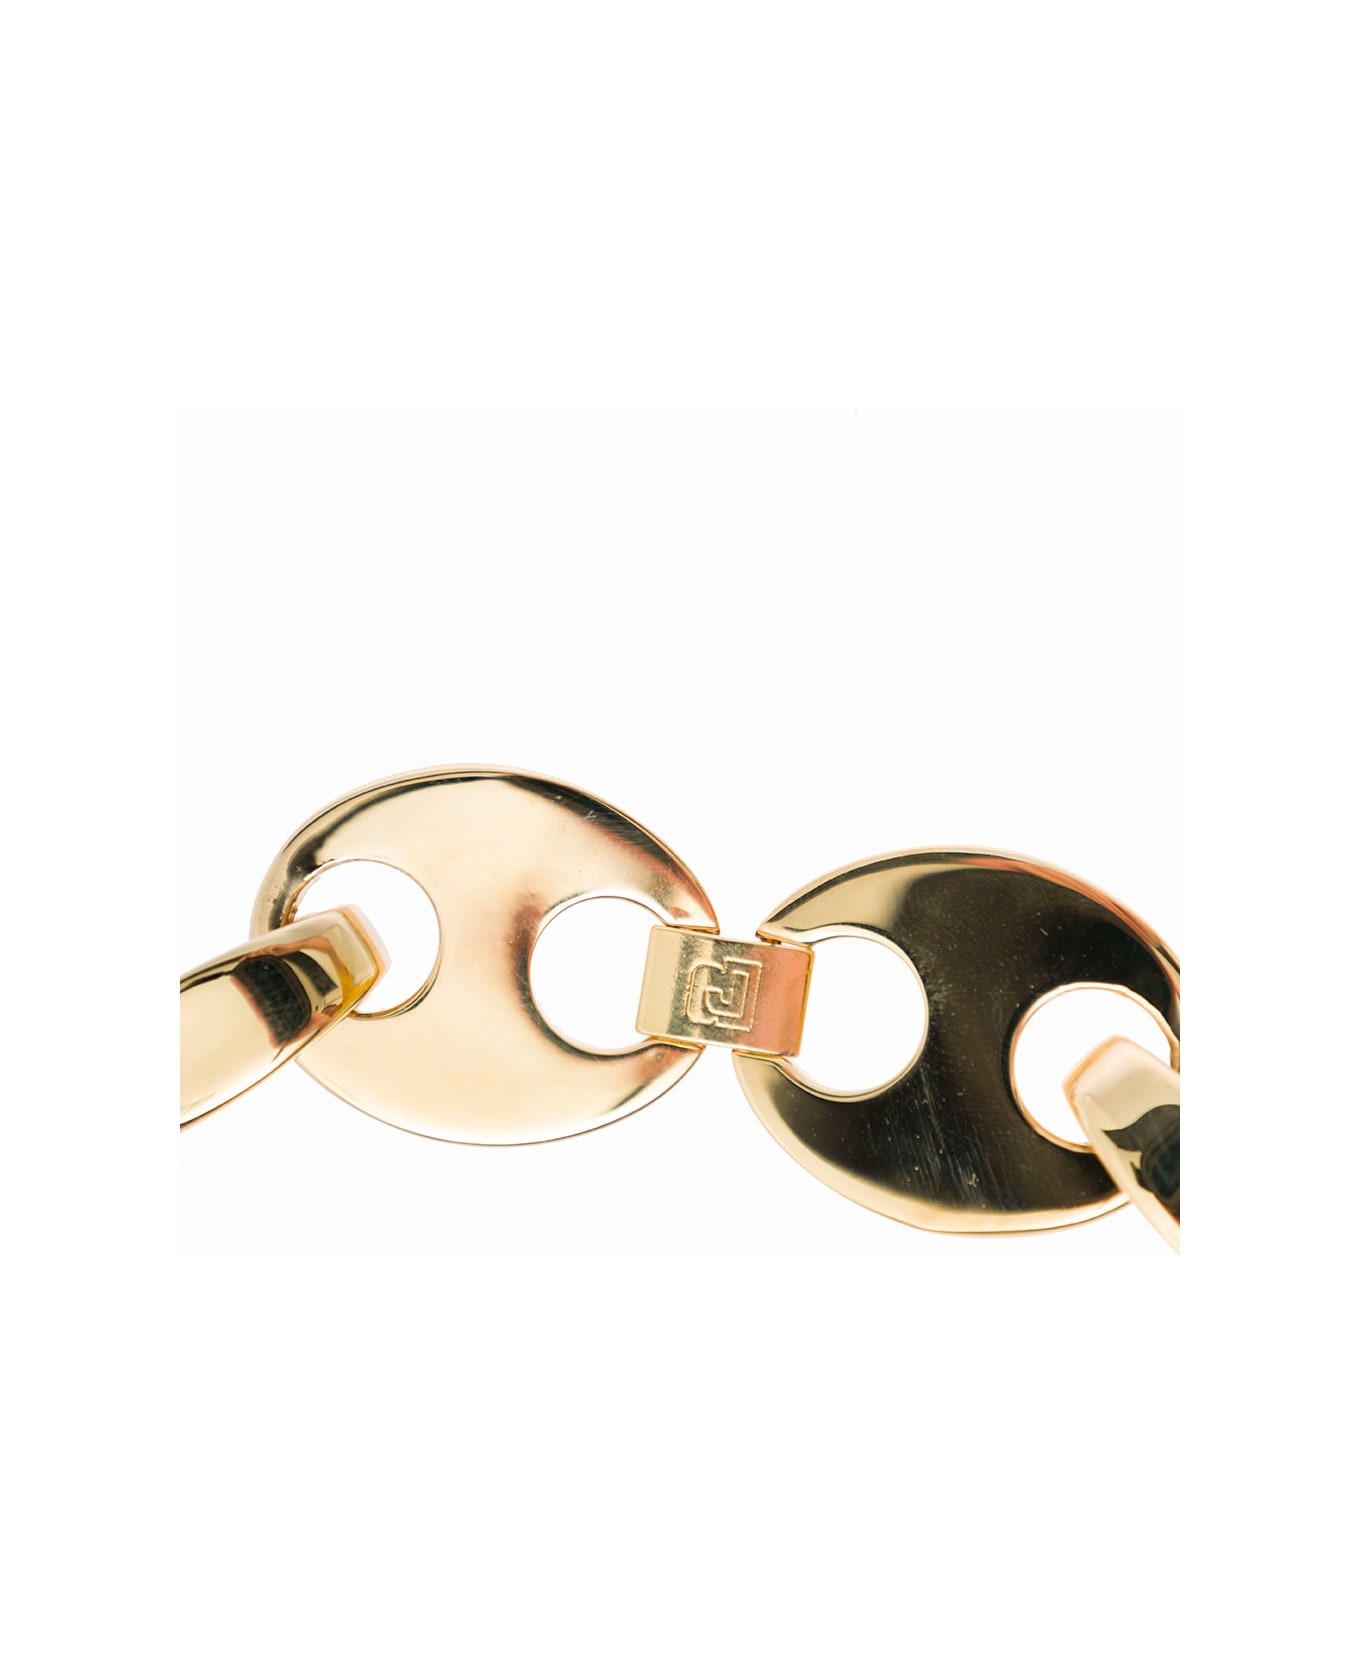 Paco Rabanne Woman's Brass Chain Necklace - Metallic